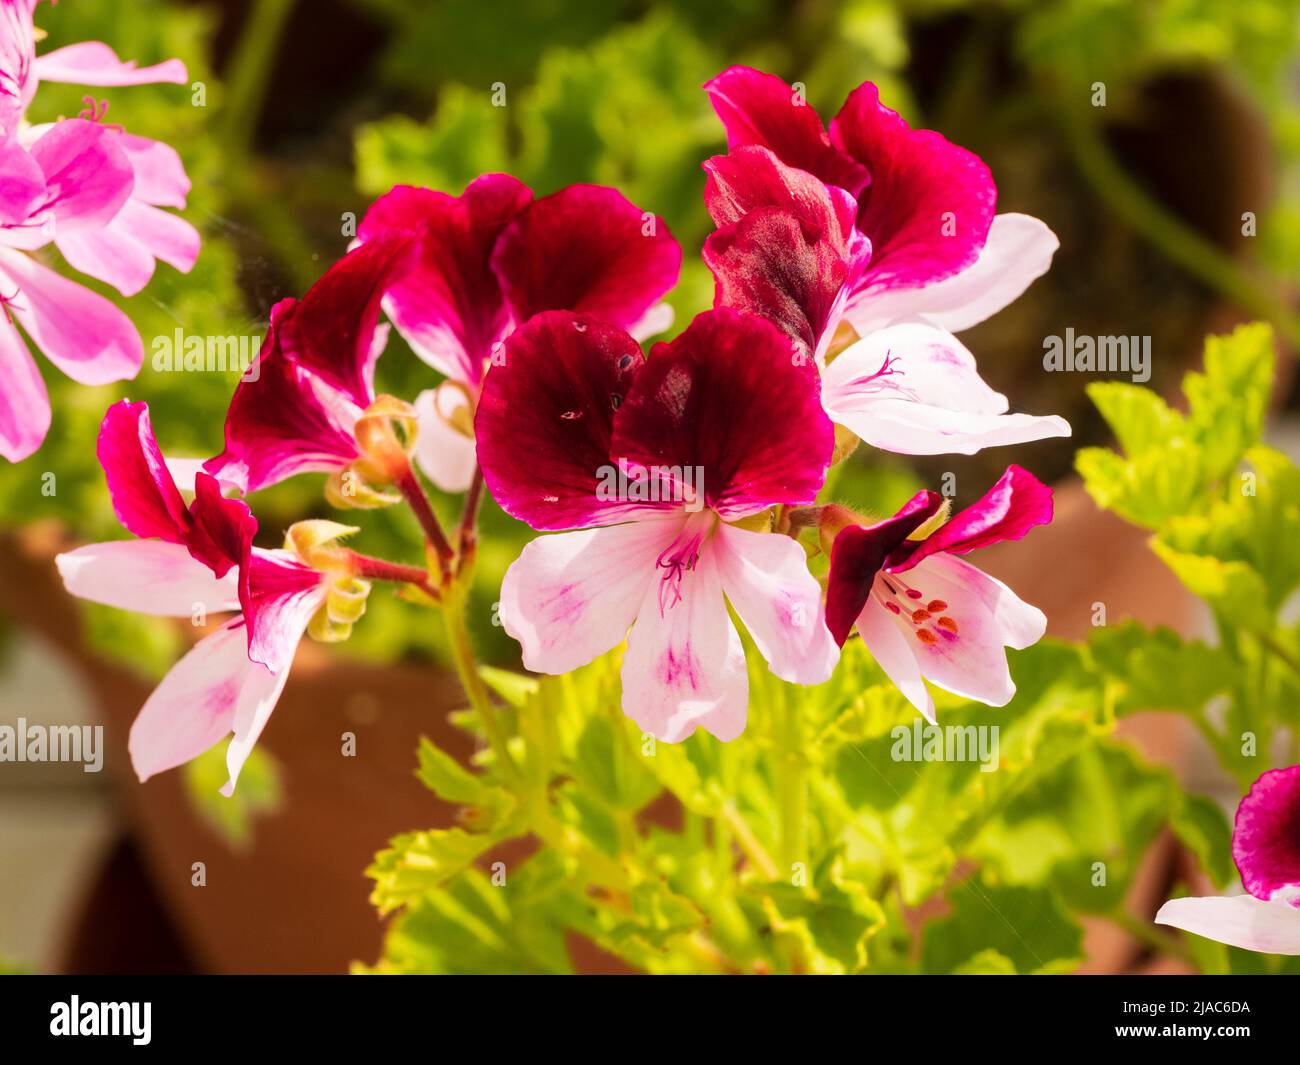 Flowers of the tender greenhouse or conservatory regal pelargonium, Pelargonium 'Wychwood' Stock Photo